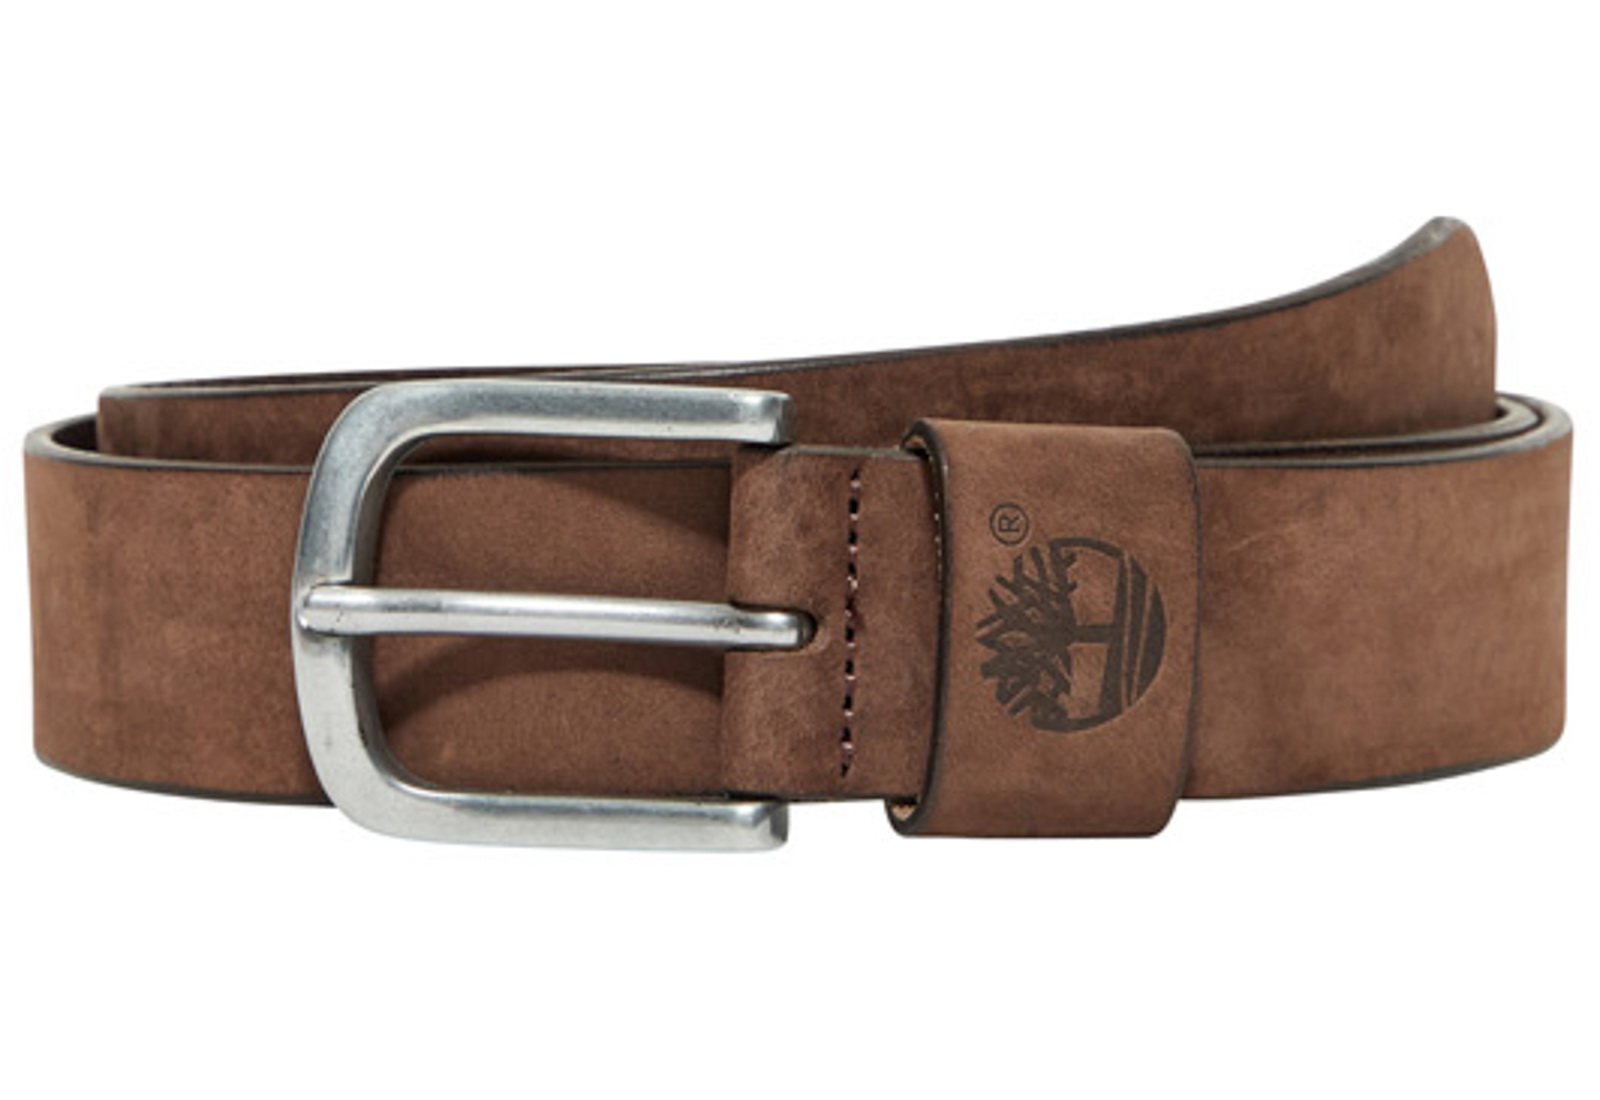 Timberland Haine Nubuck Leather Belt